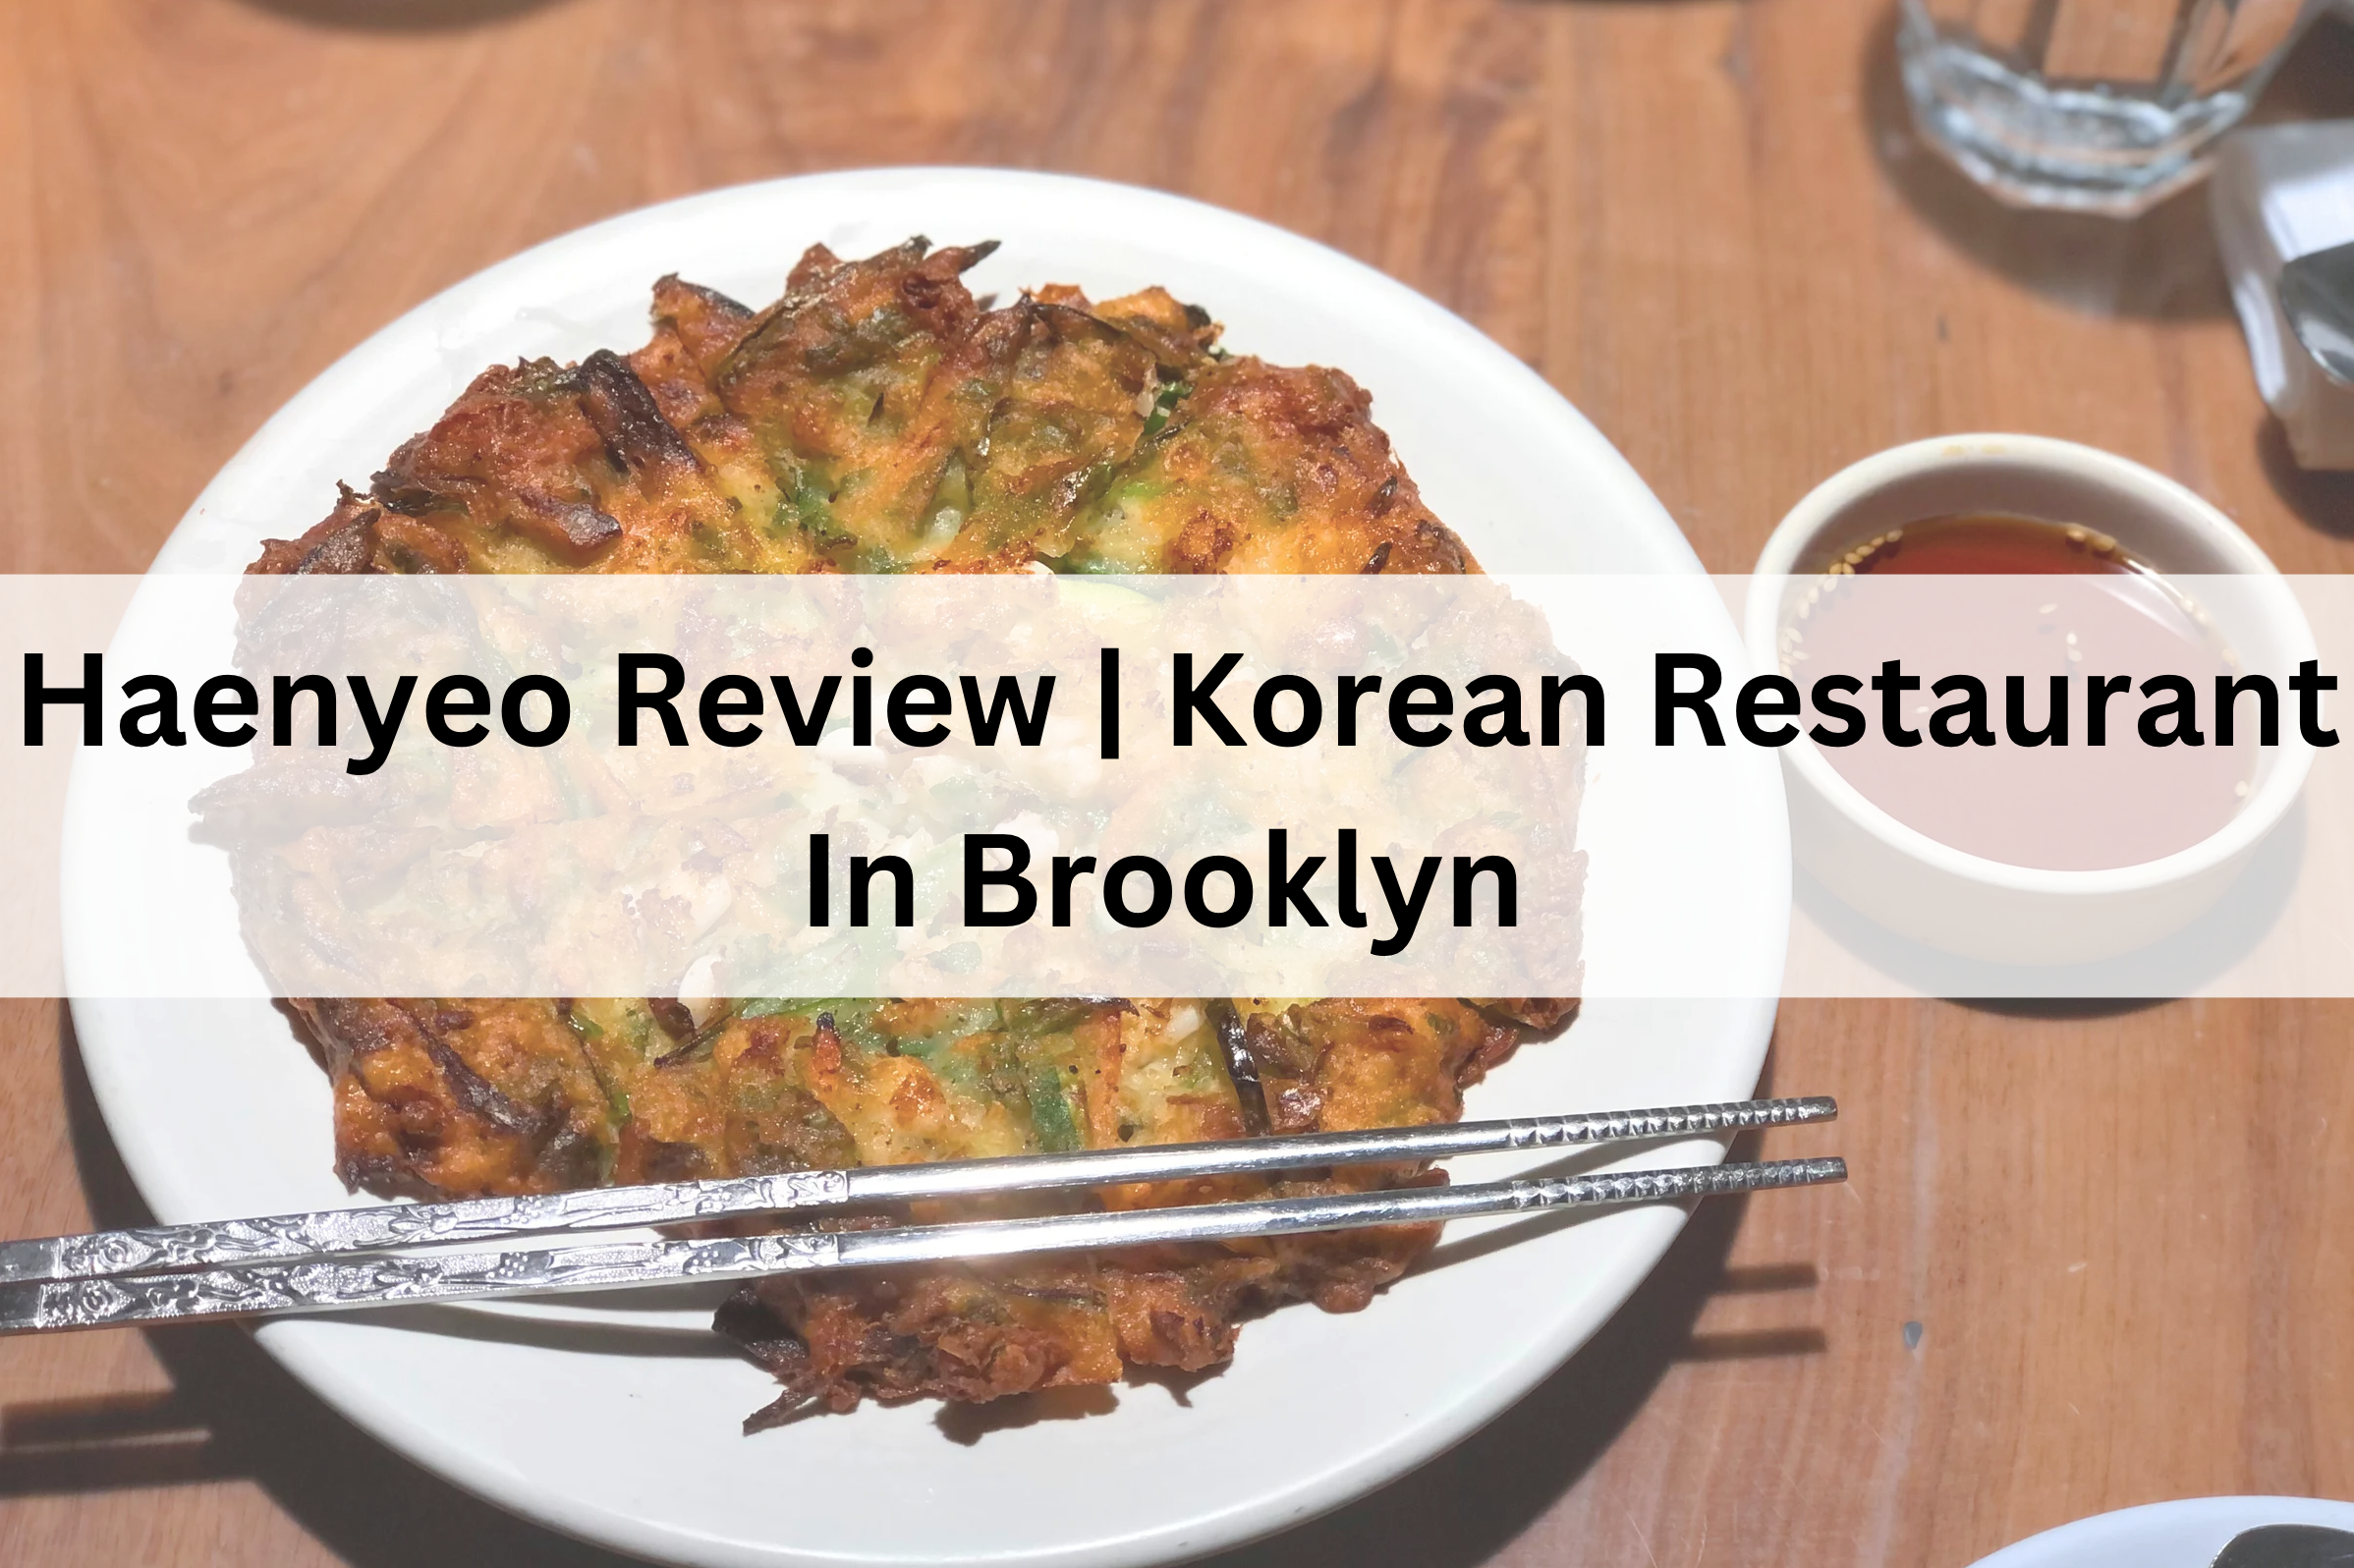 Korean restaurant in Brooklyn